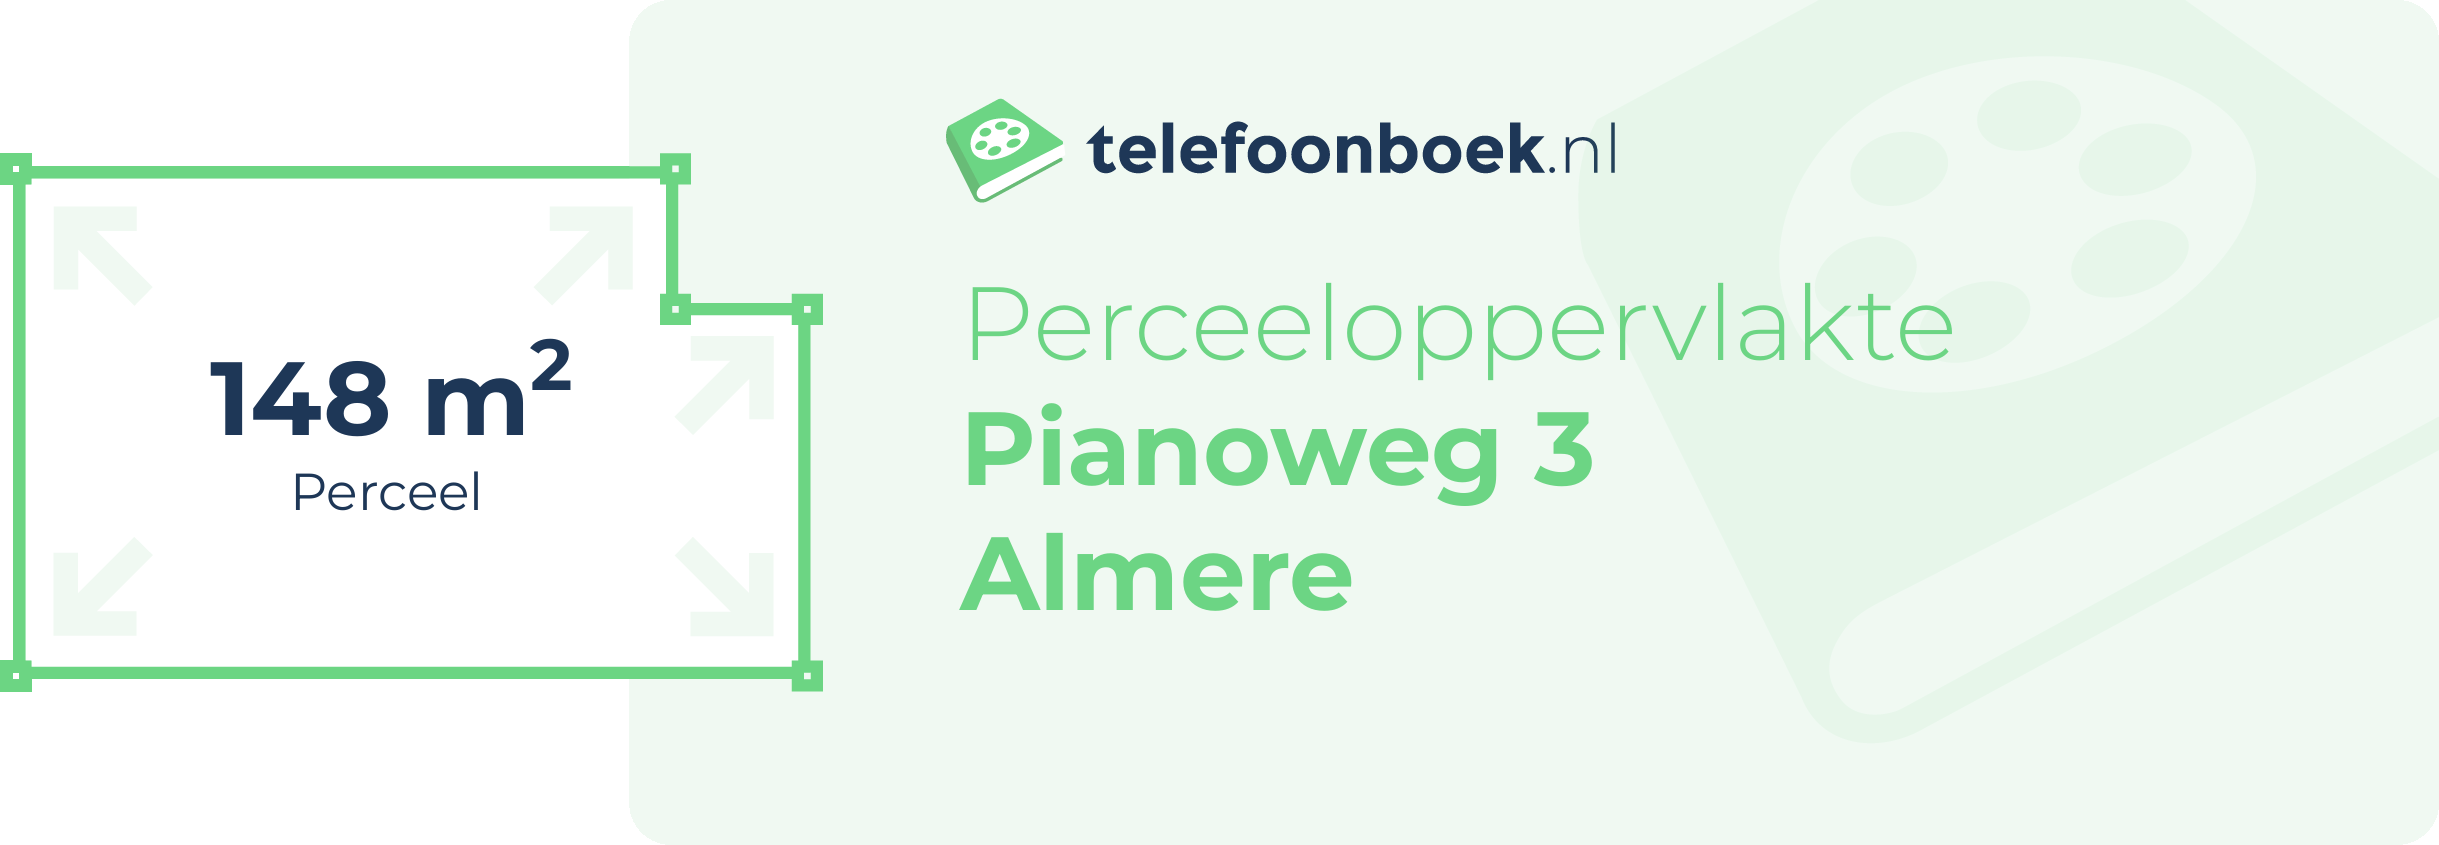 Perceeloppervlakte Pianoweg 3 Almere